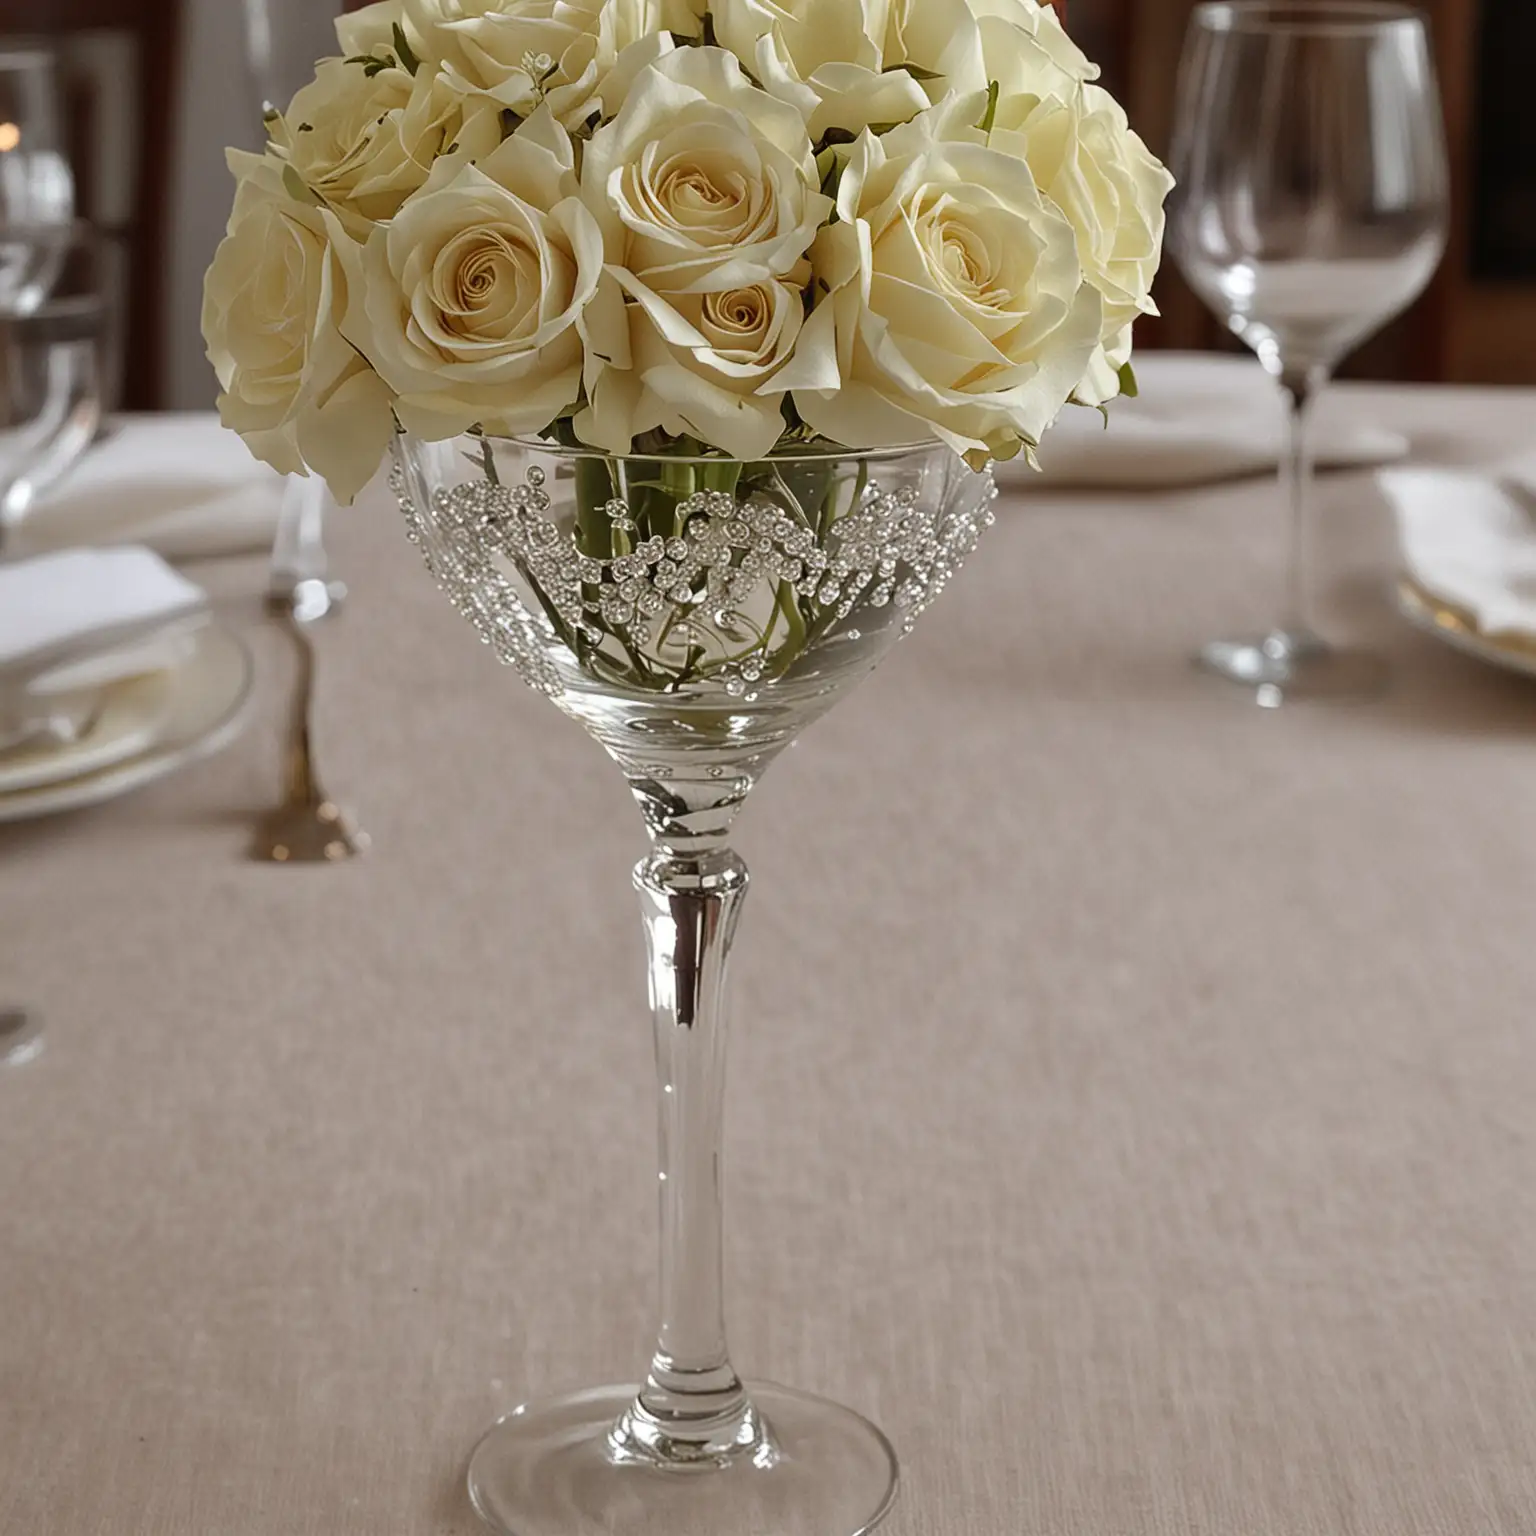 Small-Elegant-Wedding-Centerpiece-with-Wine-Glass